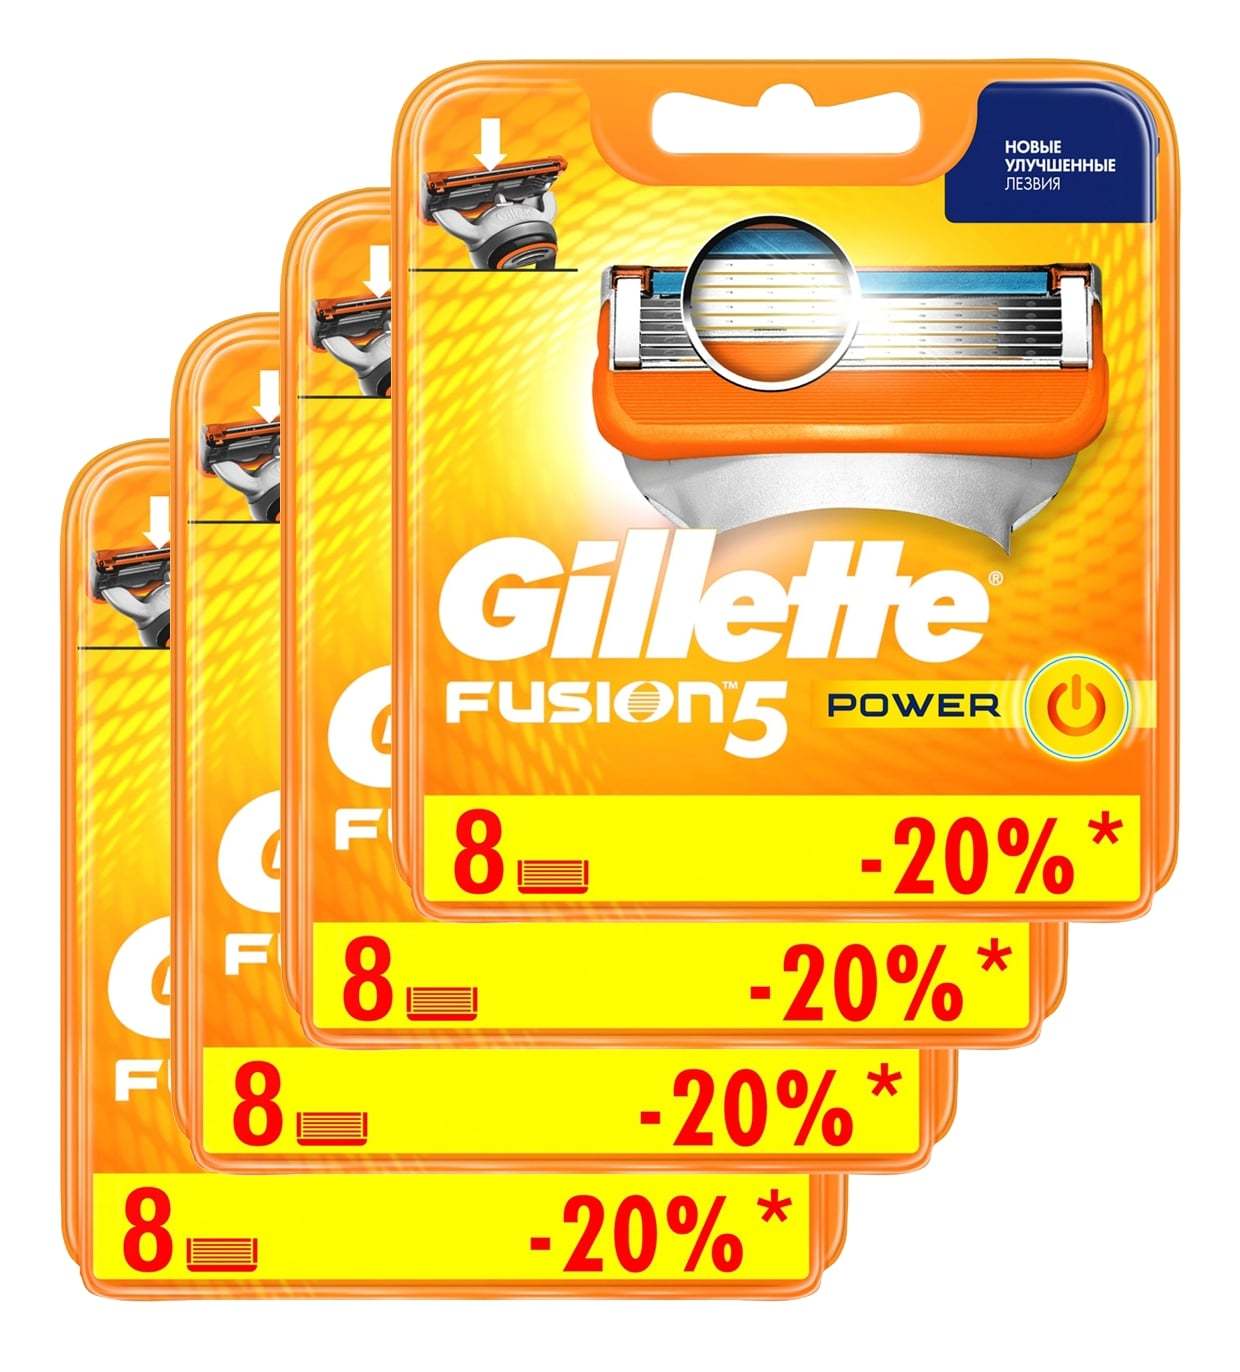 Gillette Fusion Power комплект (4х8) 32шт. (Цена за 1 пачку с учетом скидки 9% - 1410р.)